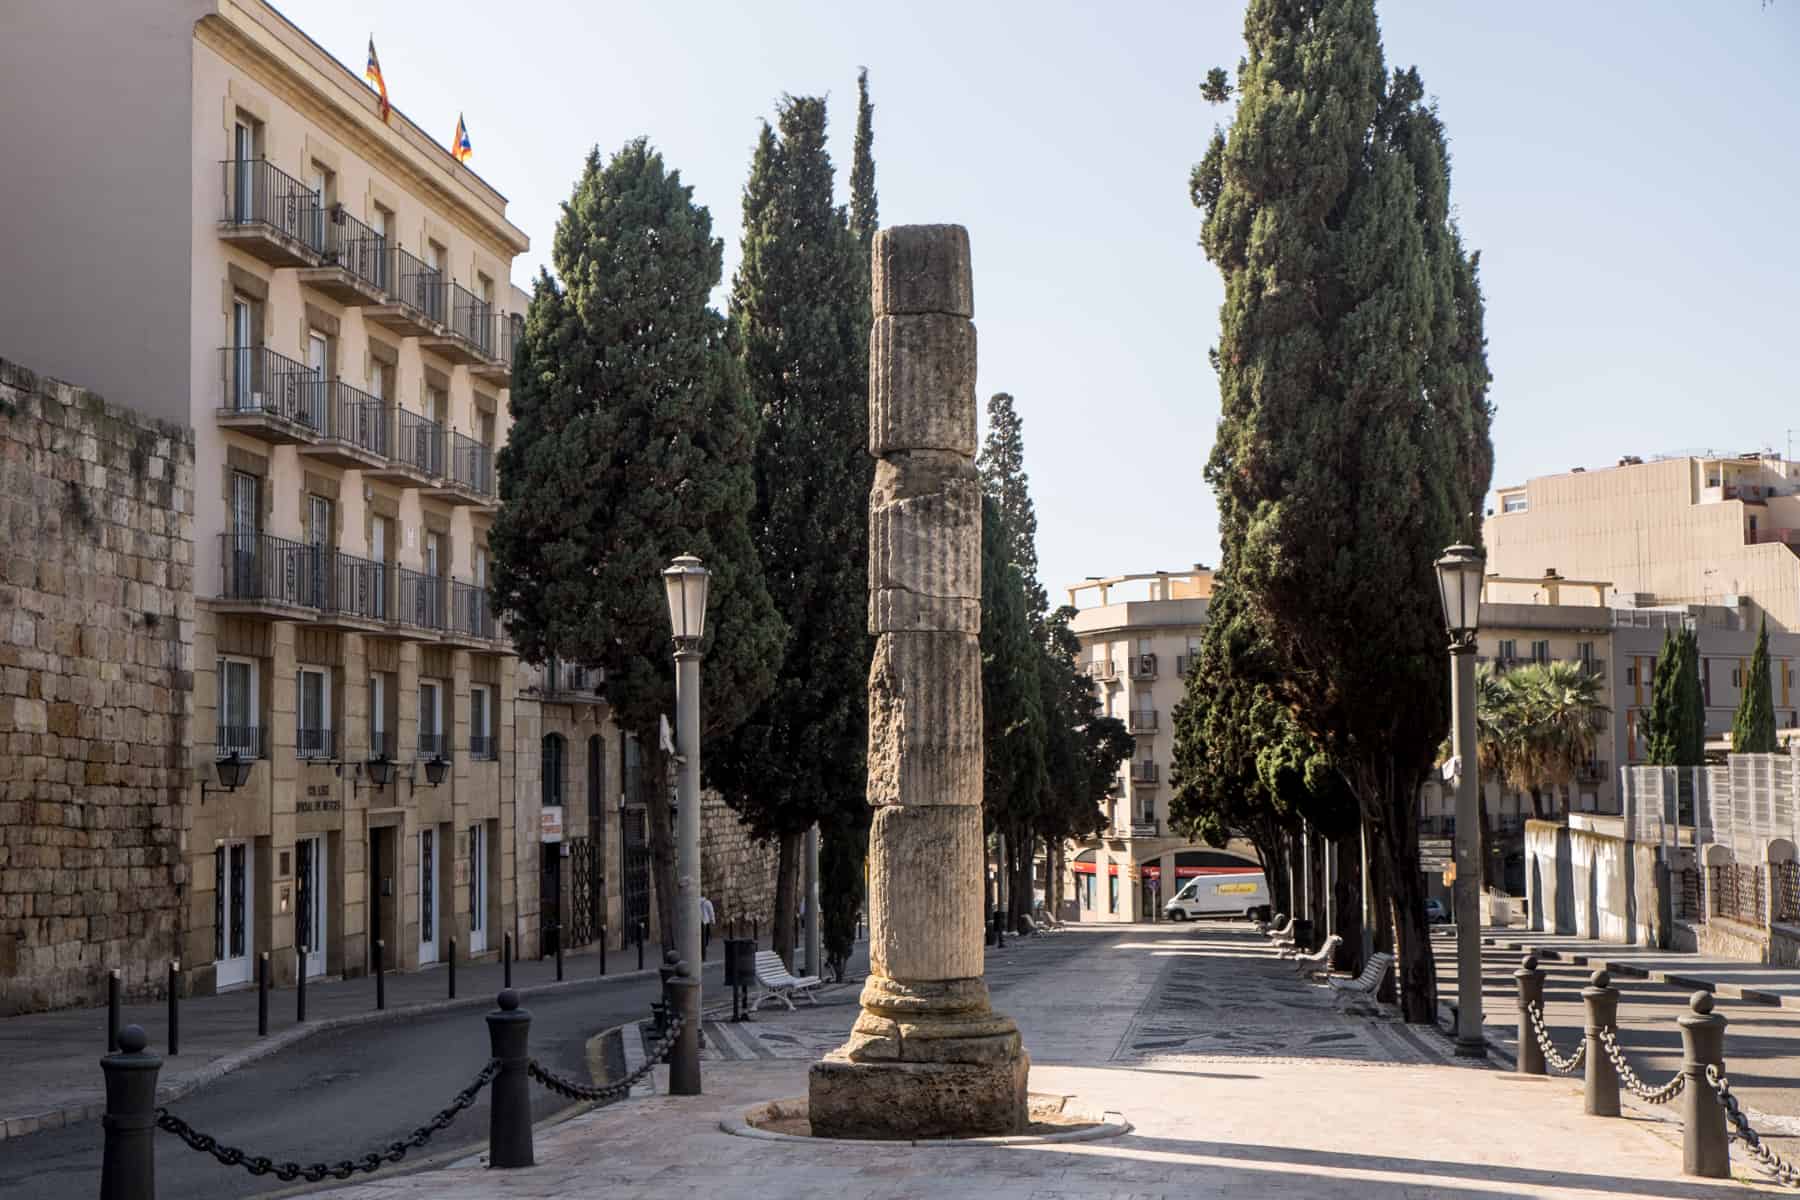 A stone Roman Column in the middle of a pedestrian street in Tarragona Spain